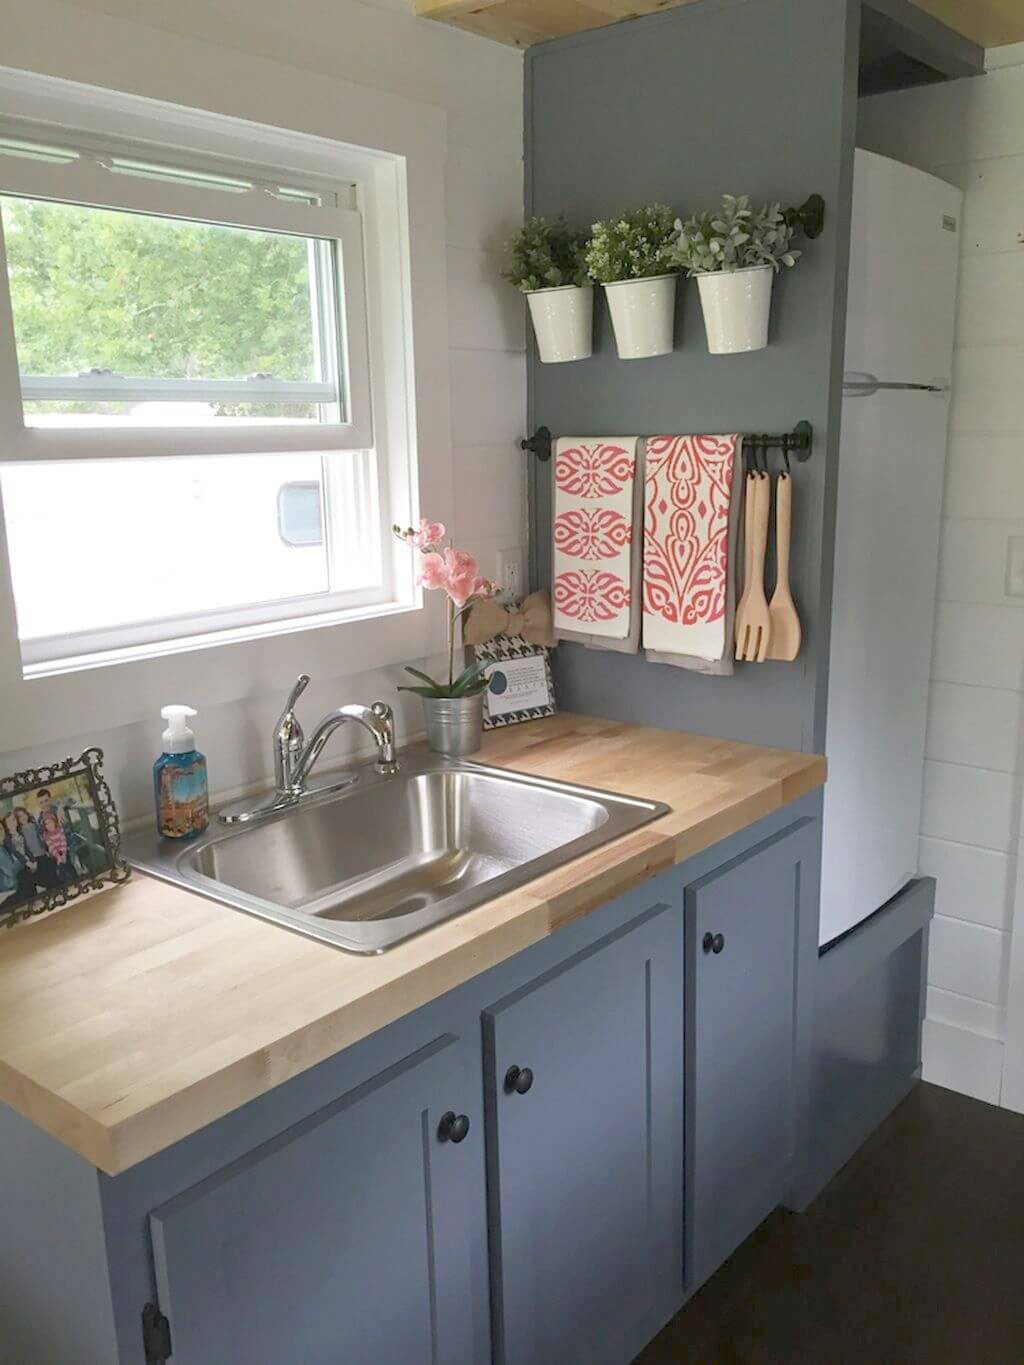 Small Kitchen Design Ideas
 30 Best Small Kitchen Decor and Design Ideas for 2019